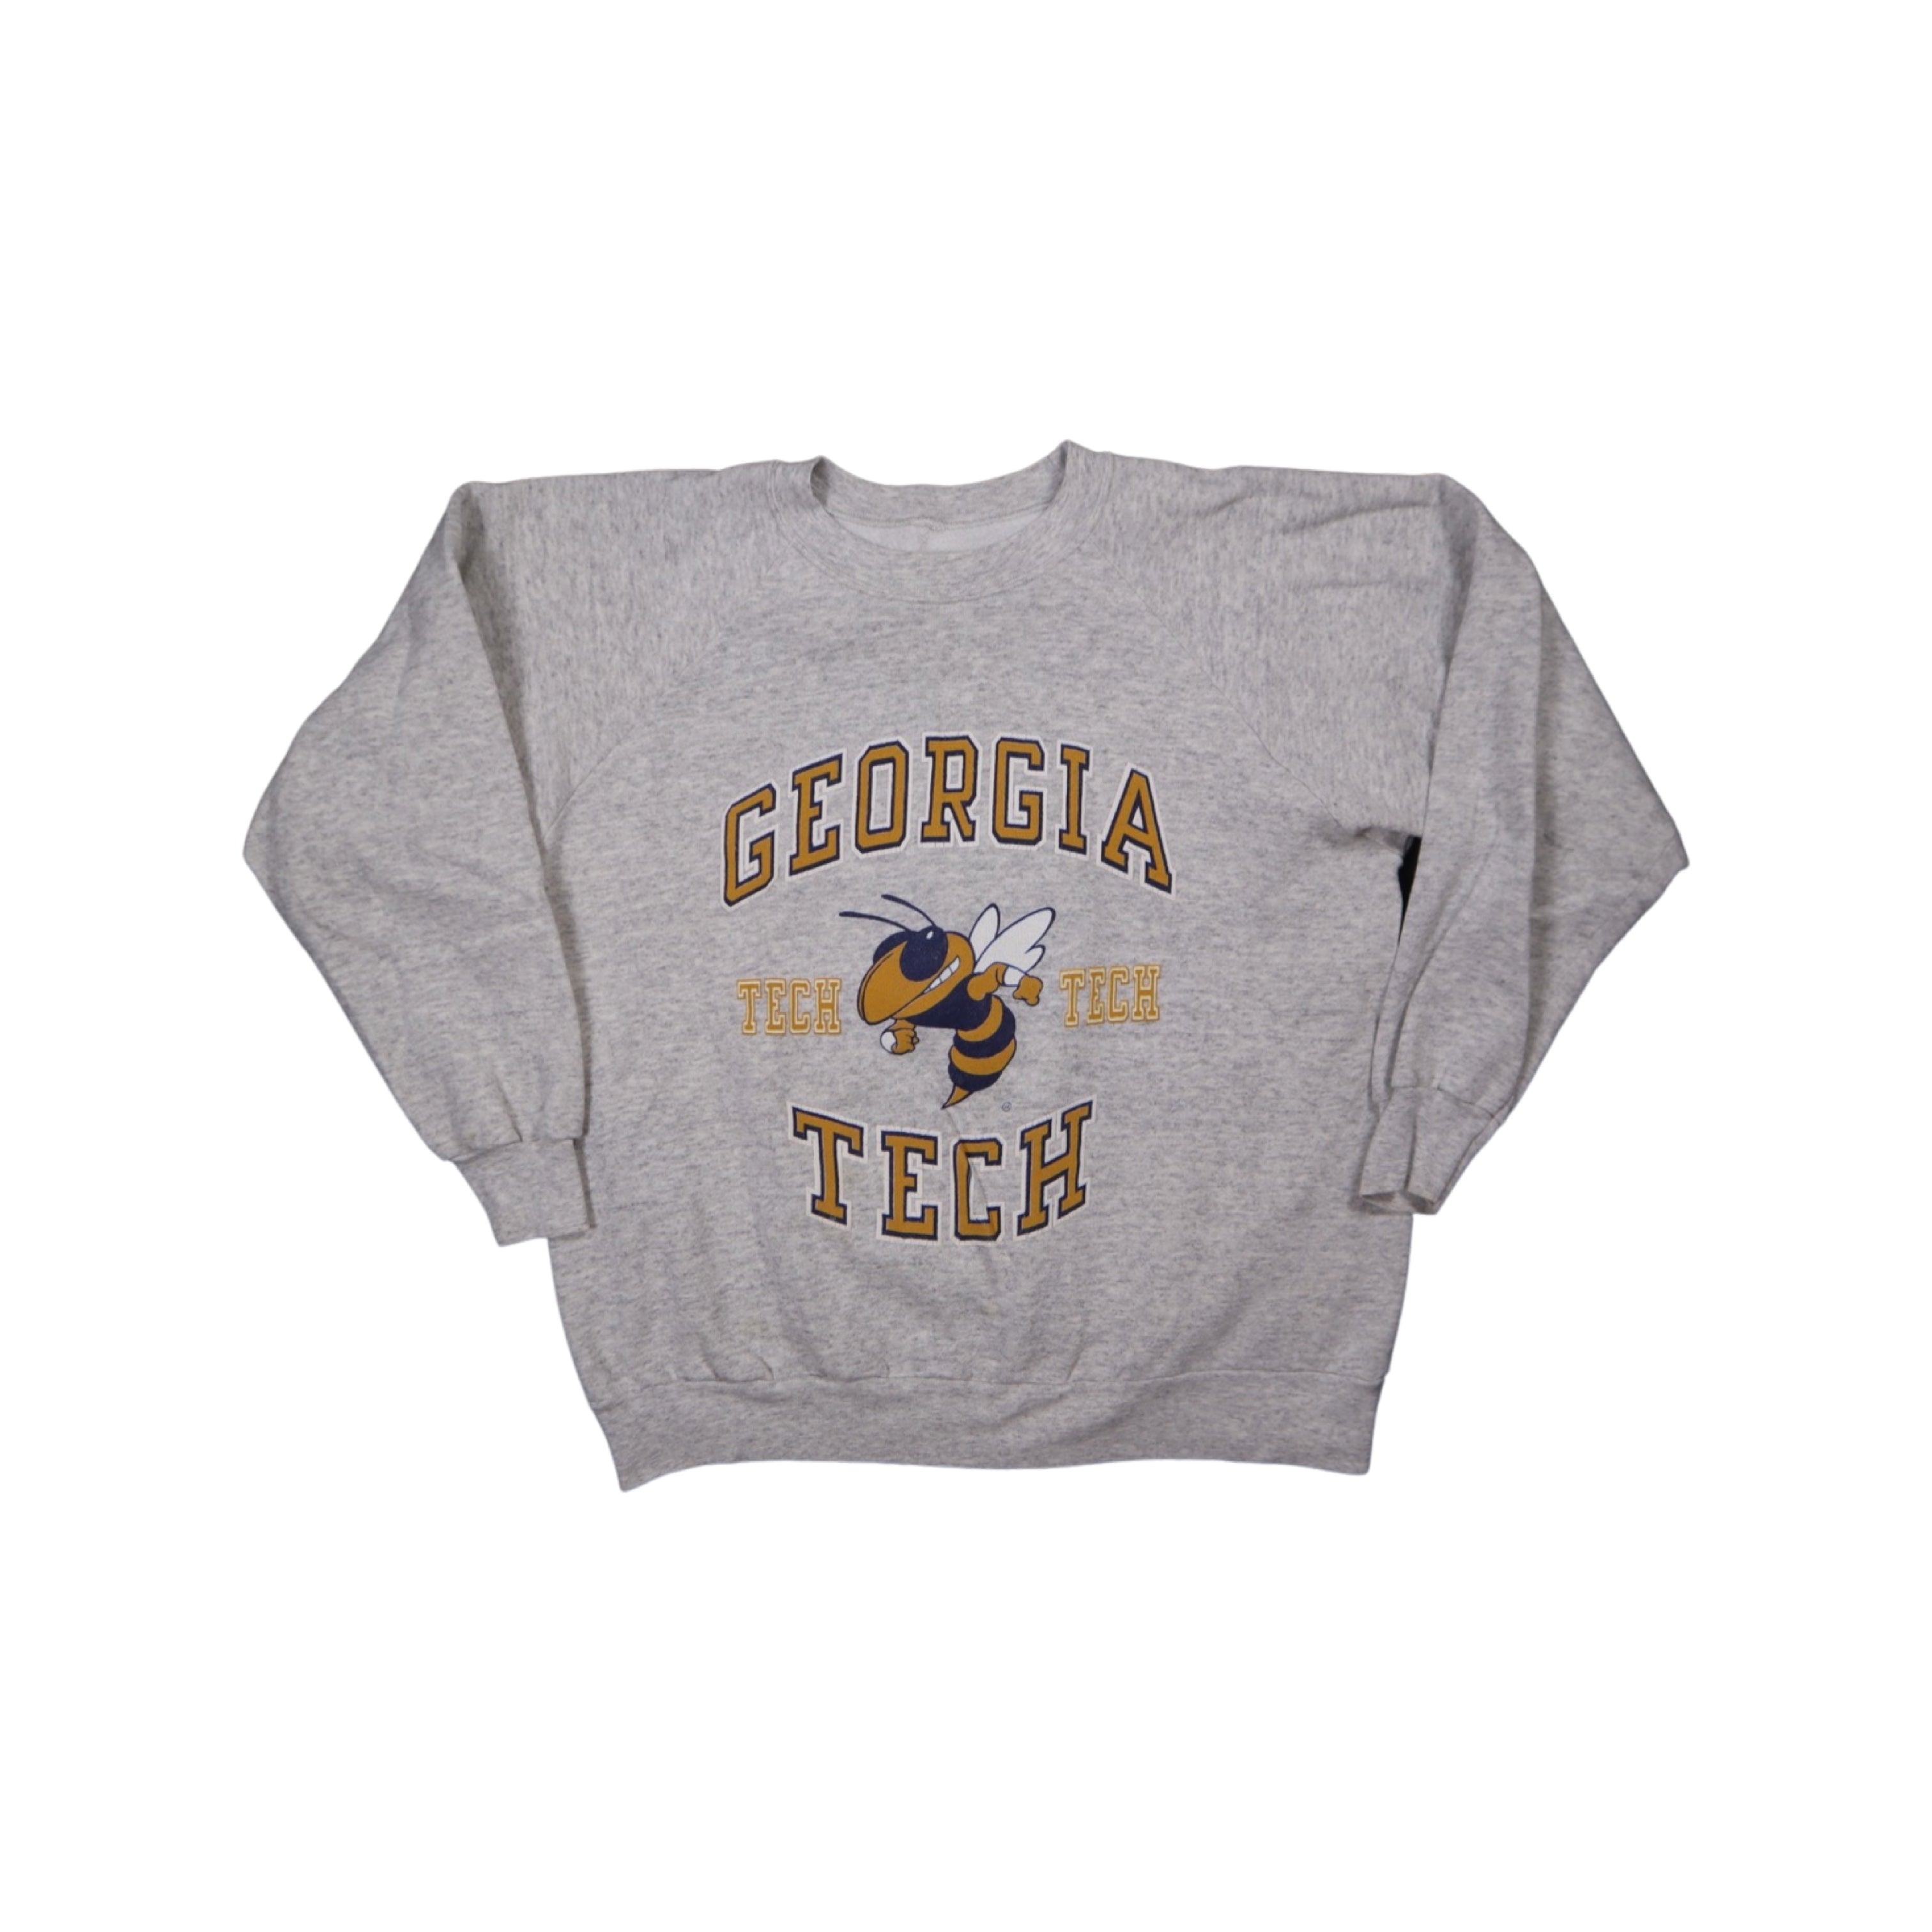 Georgia Tech 90s Sweater (Medium)